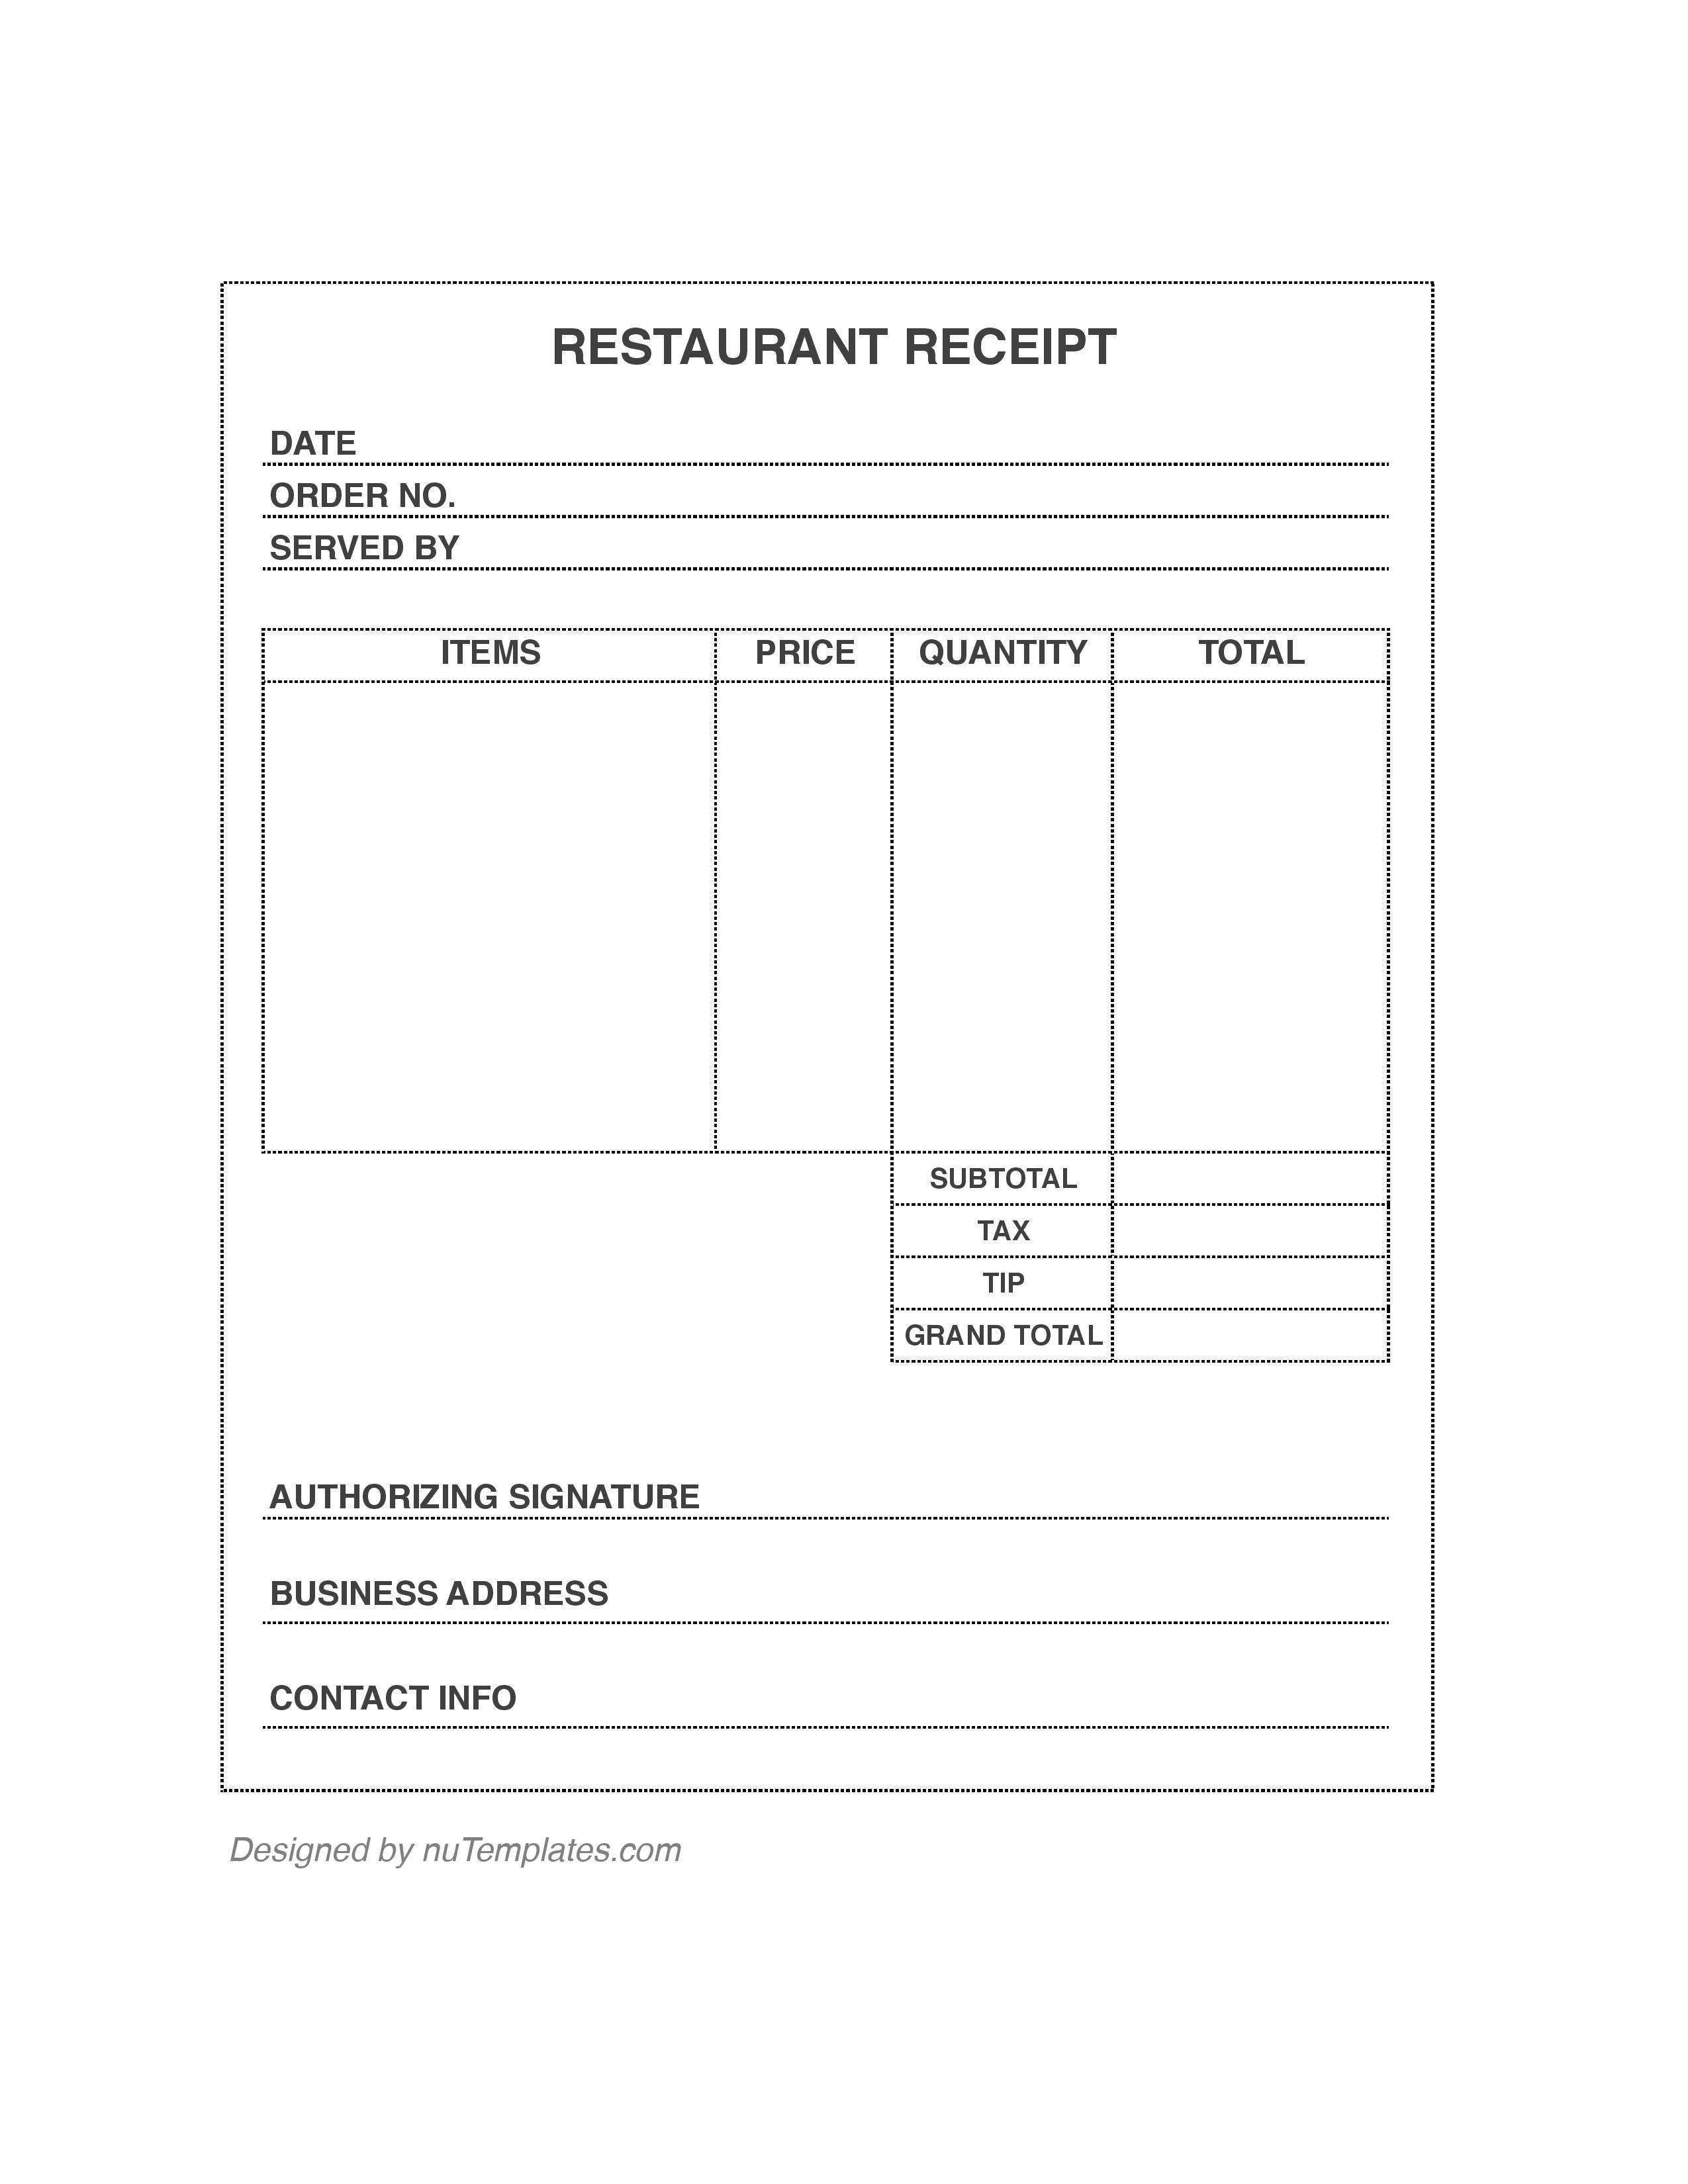 restaurant-receipt-template-restaurant-receipts-nutemplates